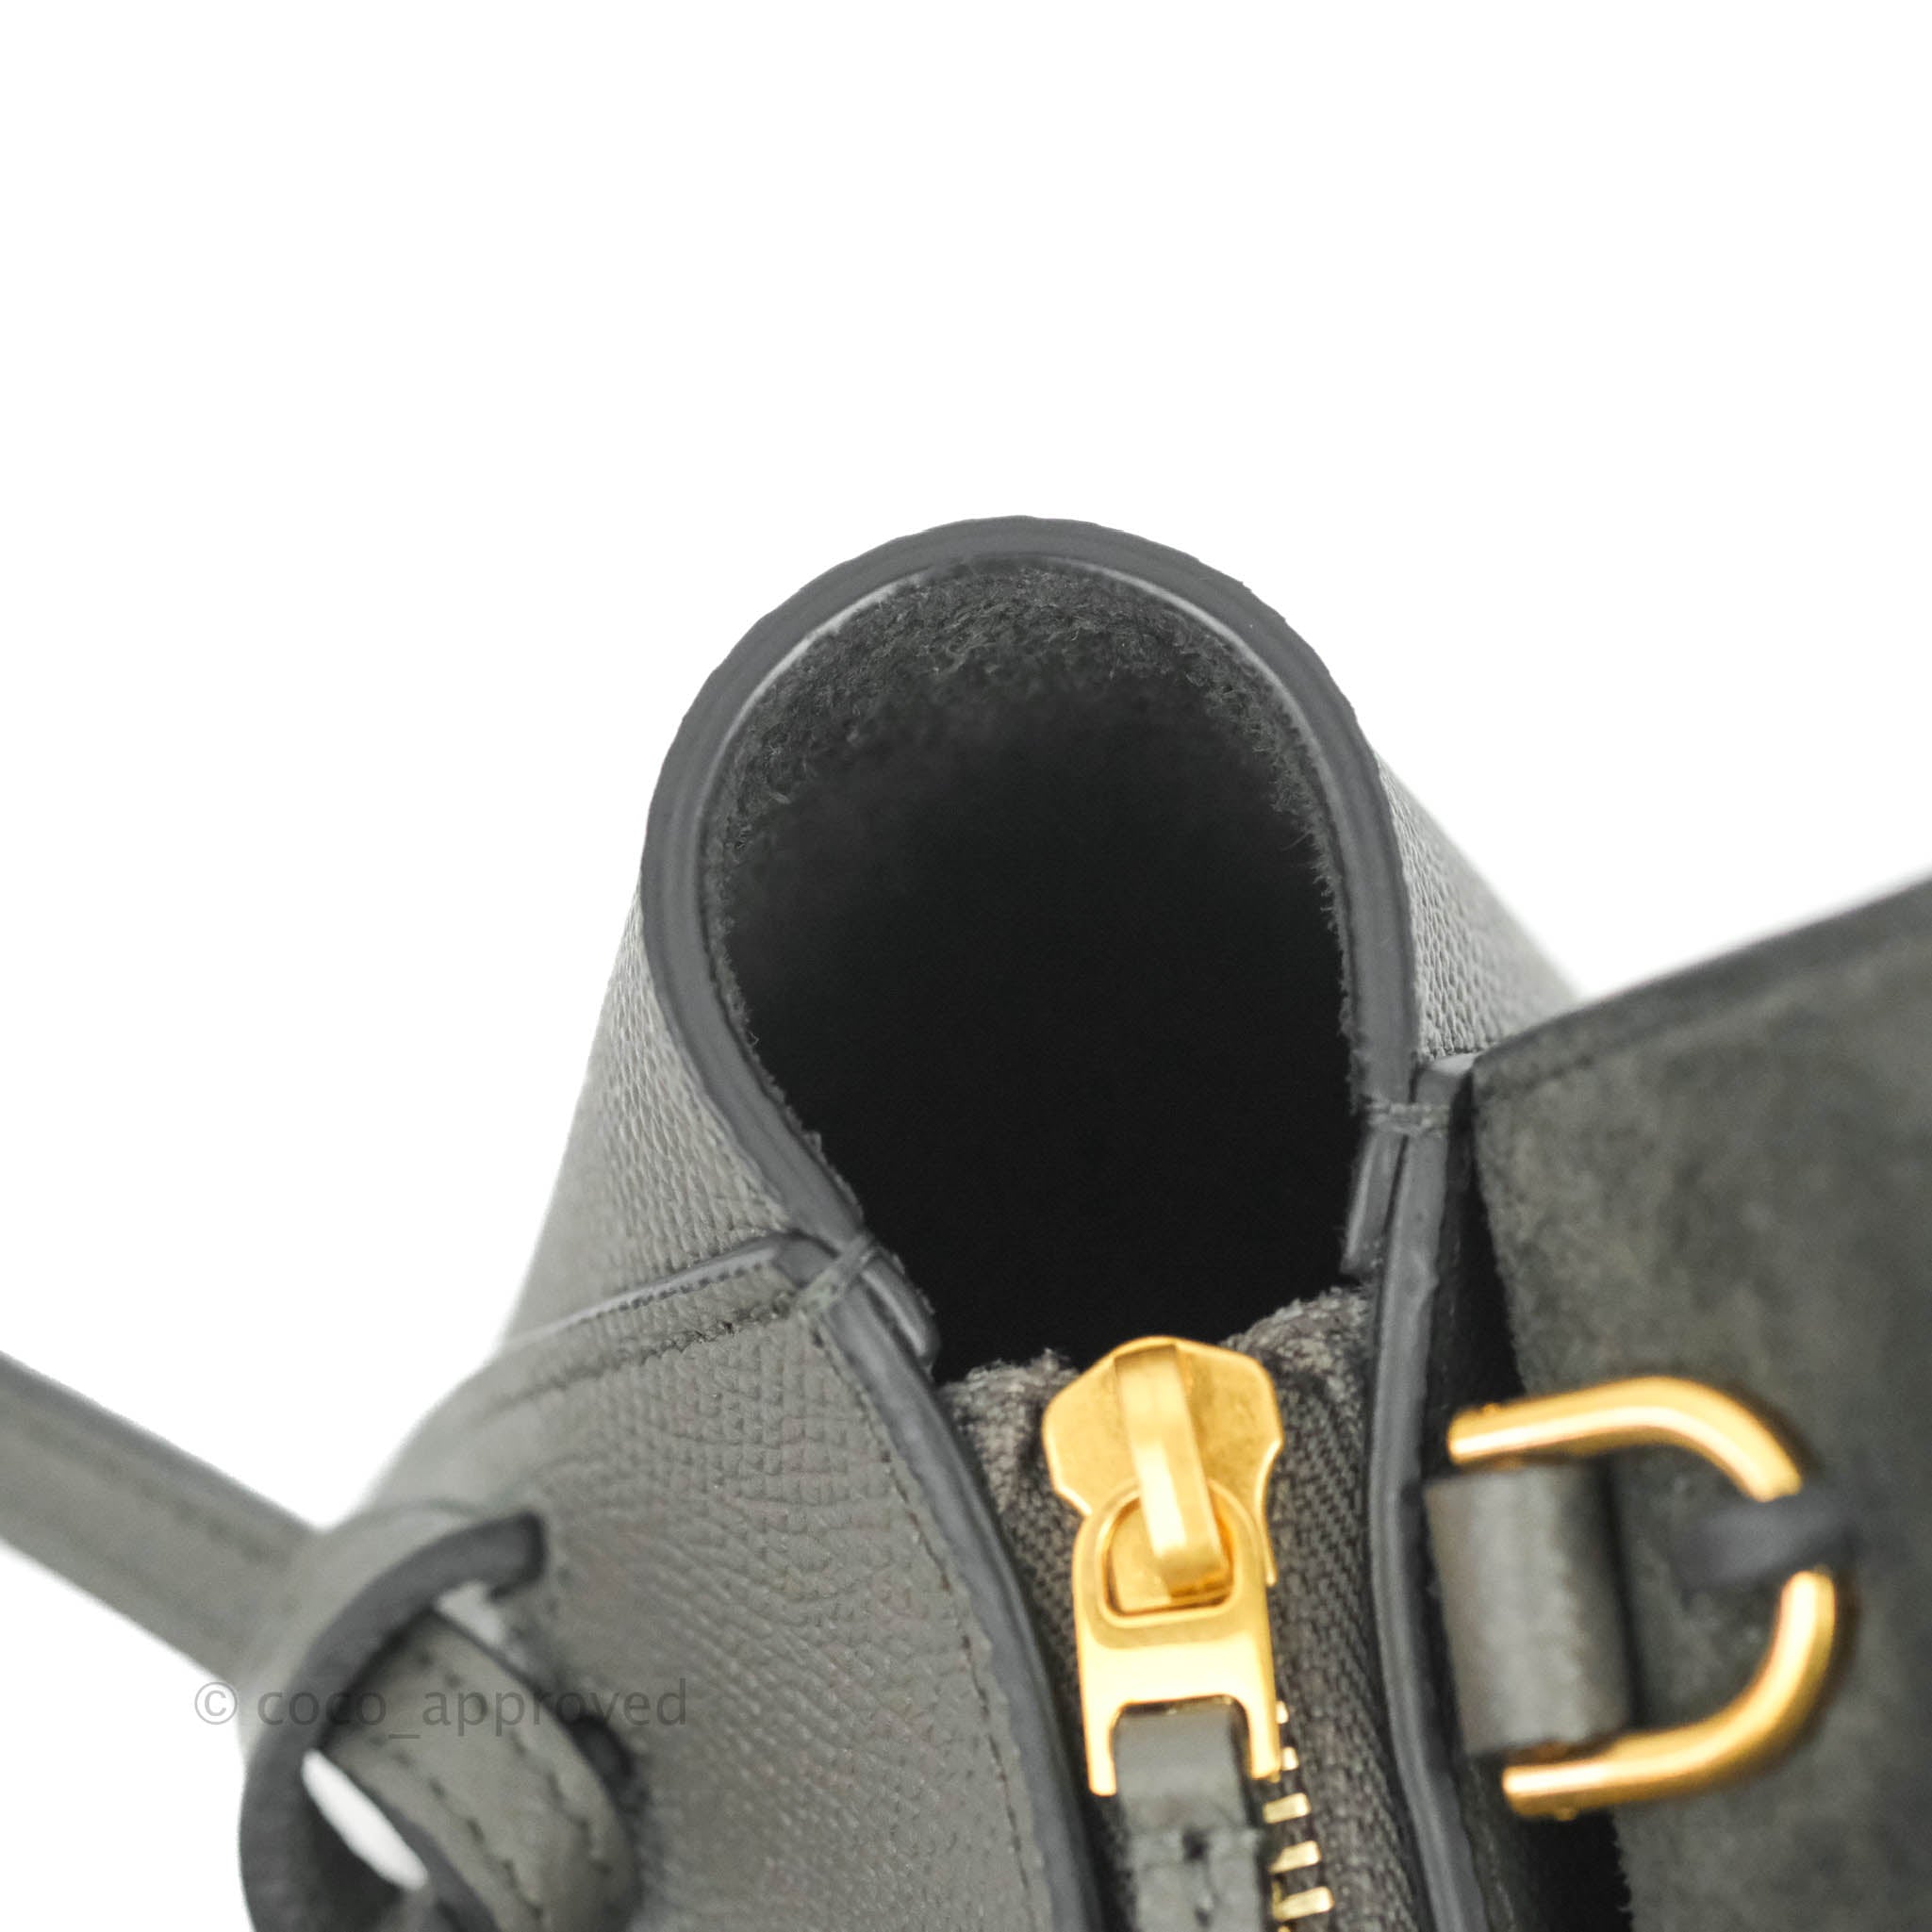 Celine Pico Belt Bag - Grey Handle Bags, Handbags - CEL250005